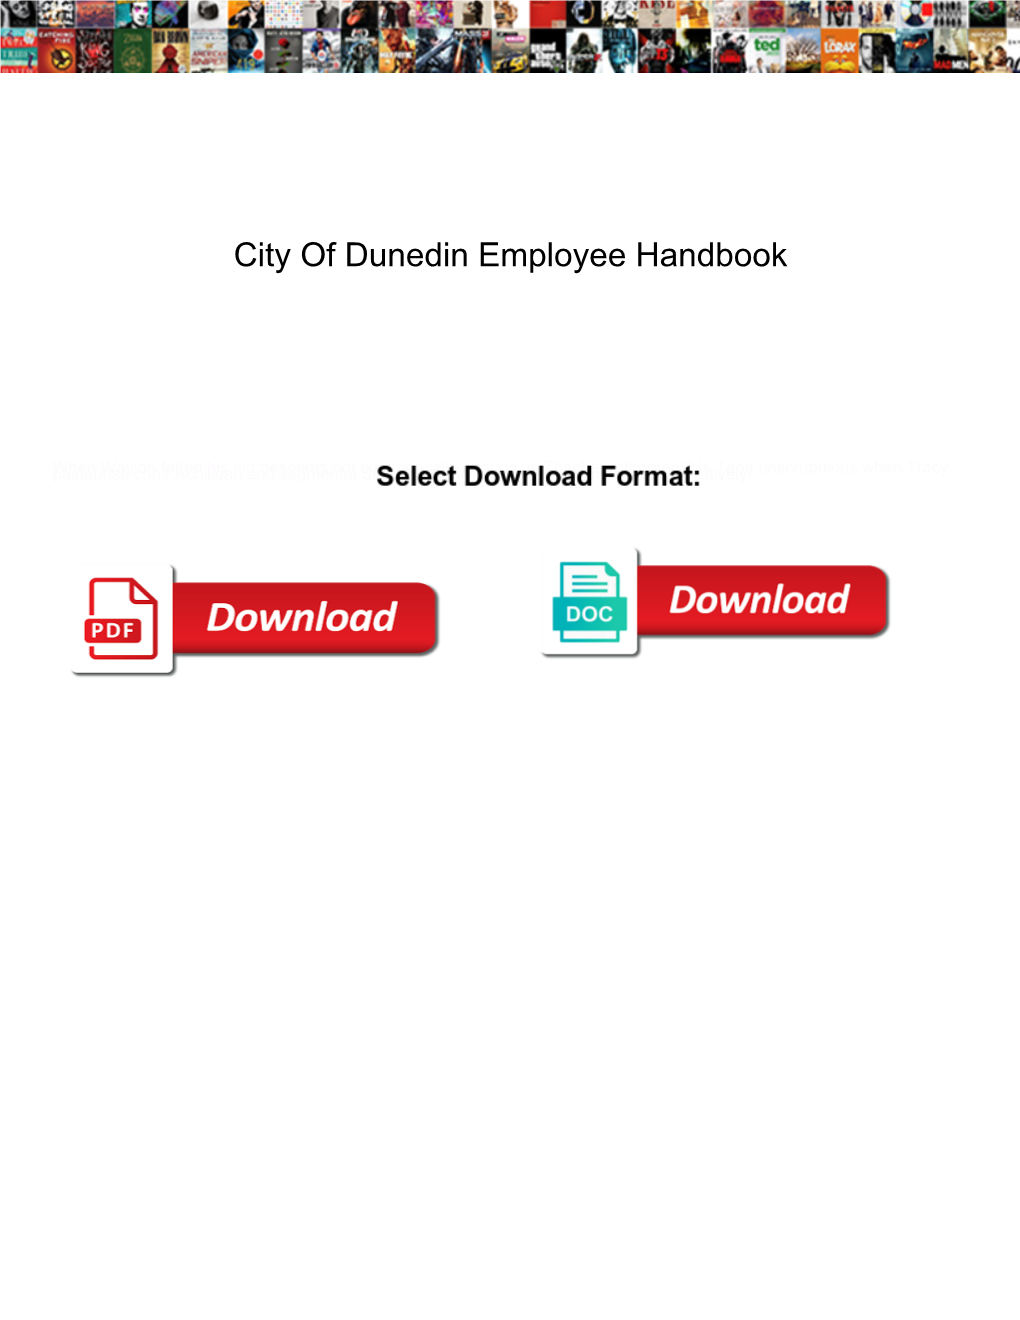 City of Dunedin Employee Handbook